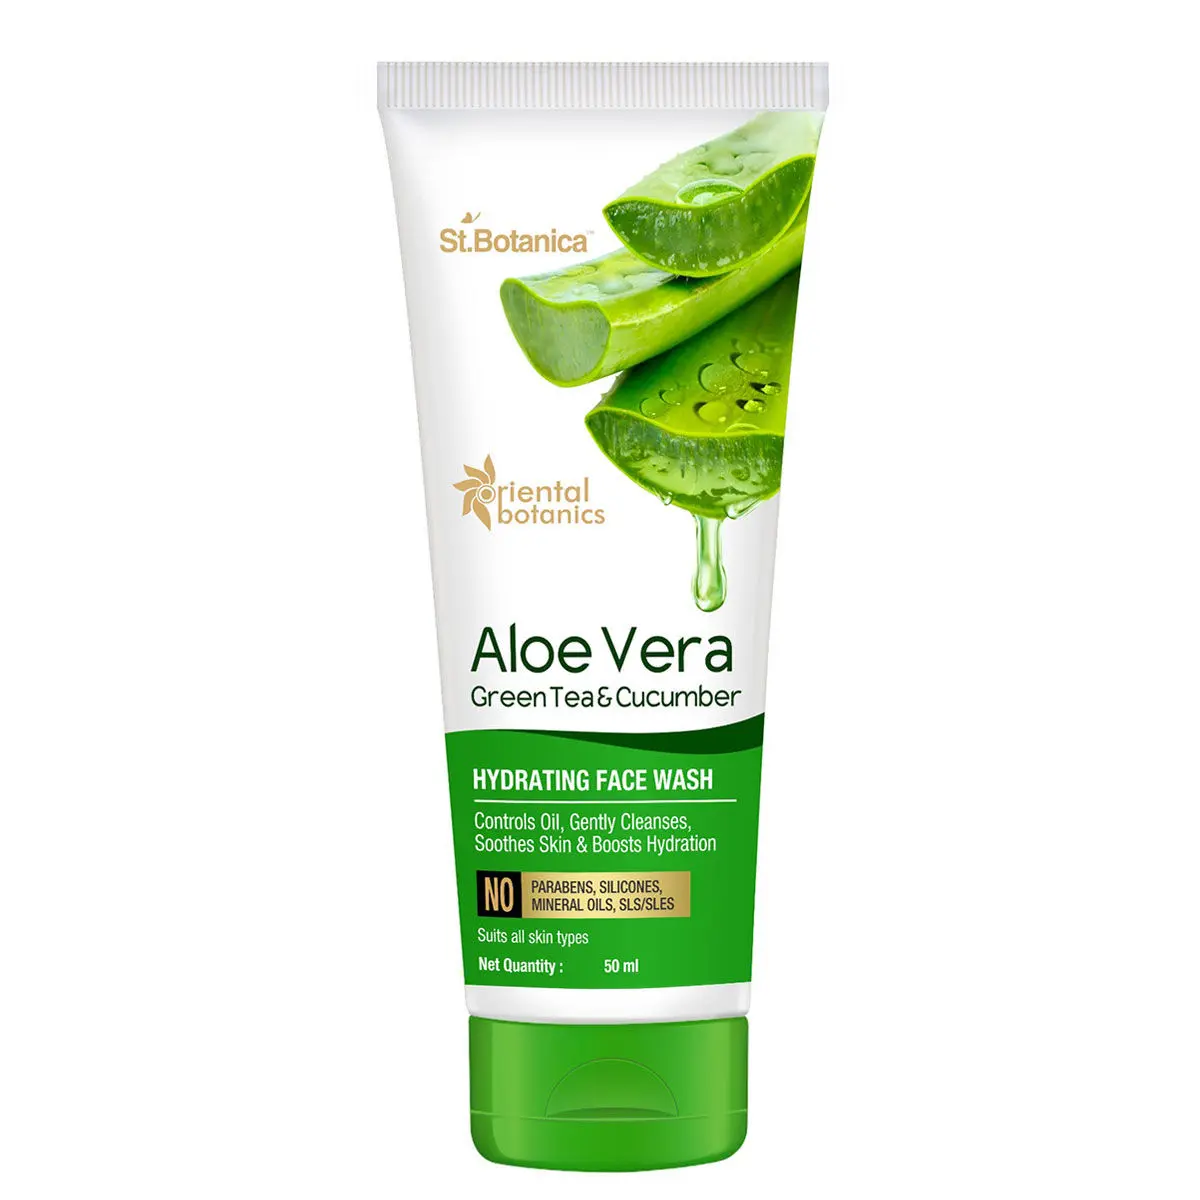 Oriental Botanics Aloe Vera, Green Tea & Cucumber Hydrating Face Wash, 50 ml | Infused with Aloe Vera, Green Tea & Cucumber | Hydrates & Gently Cleanses | No Parabens & Sulphates | Cruelty Free